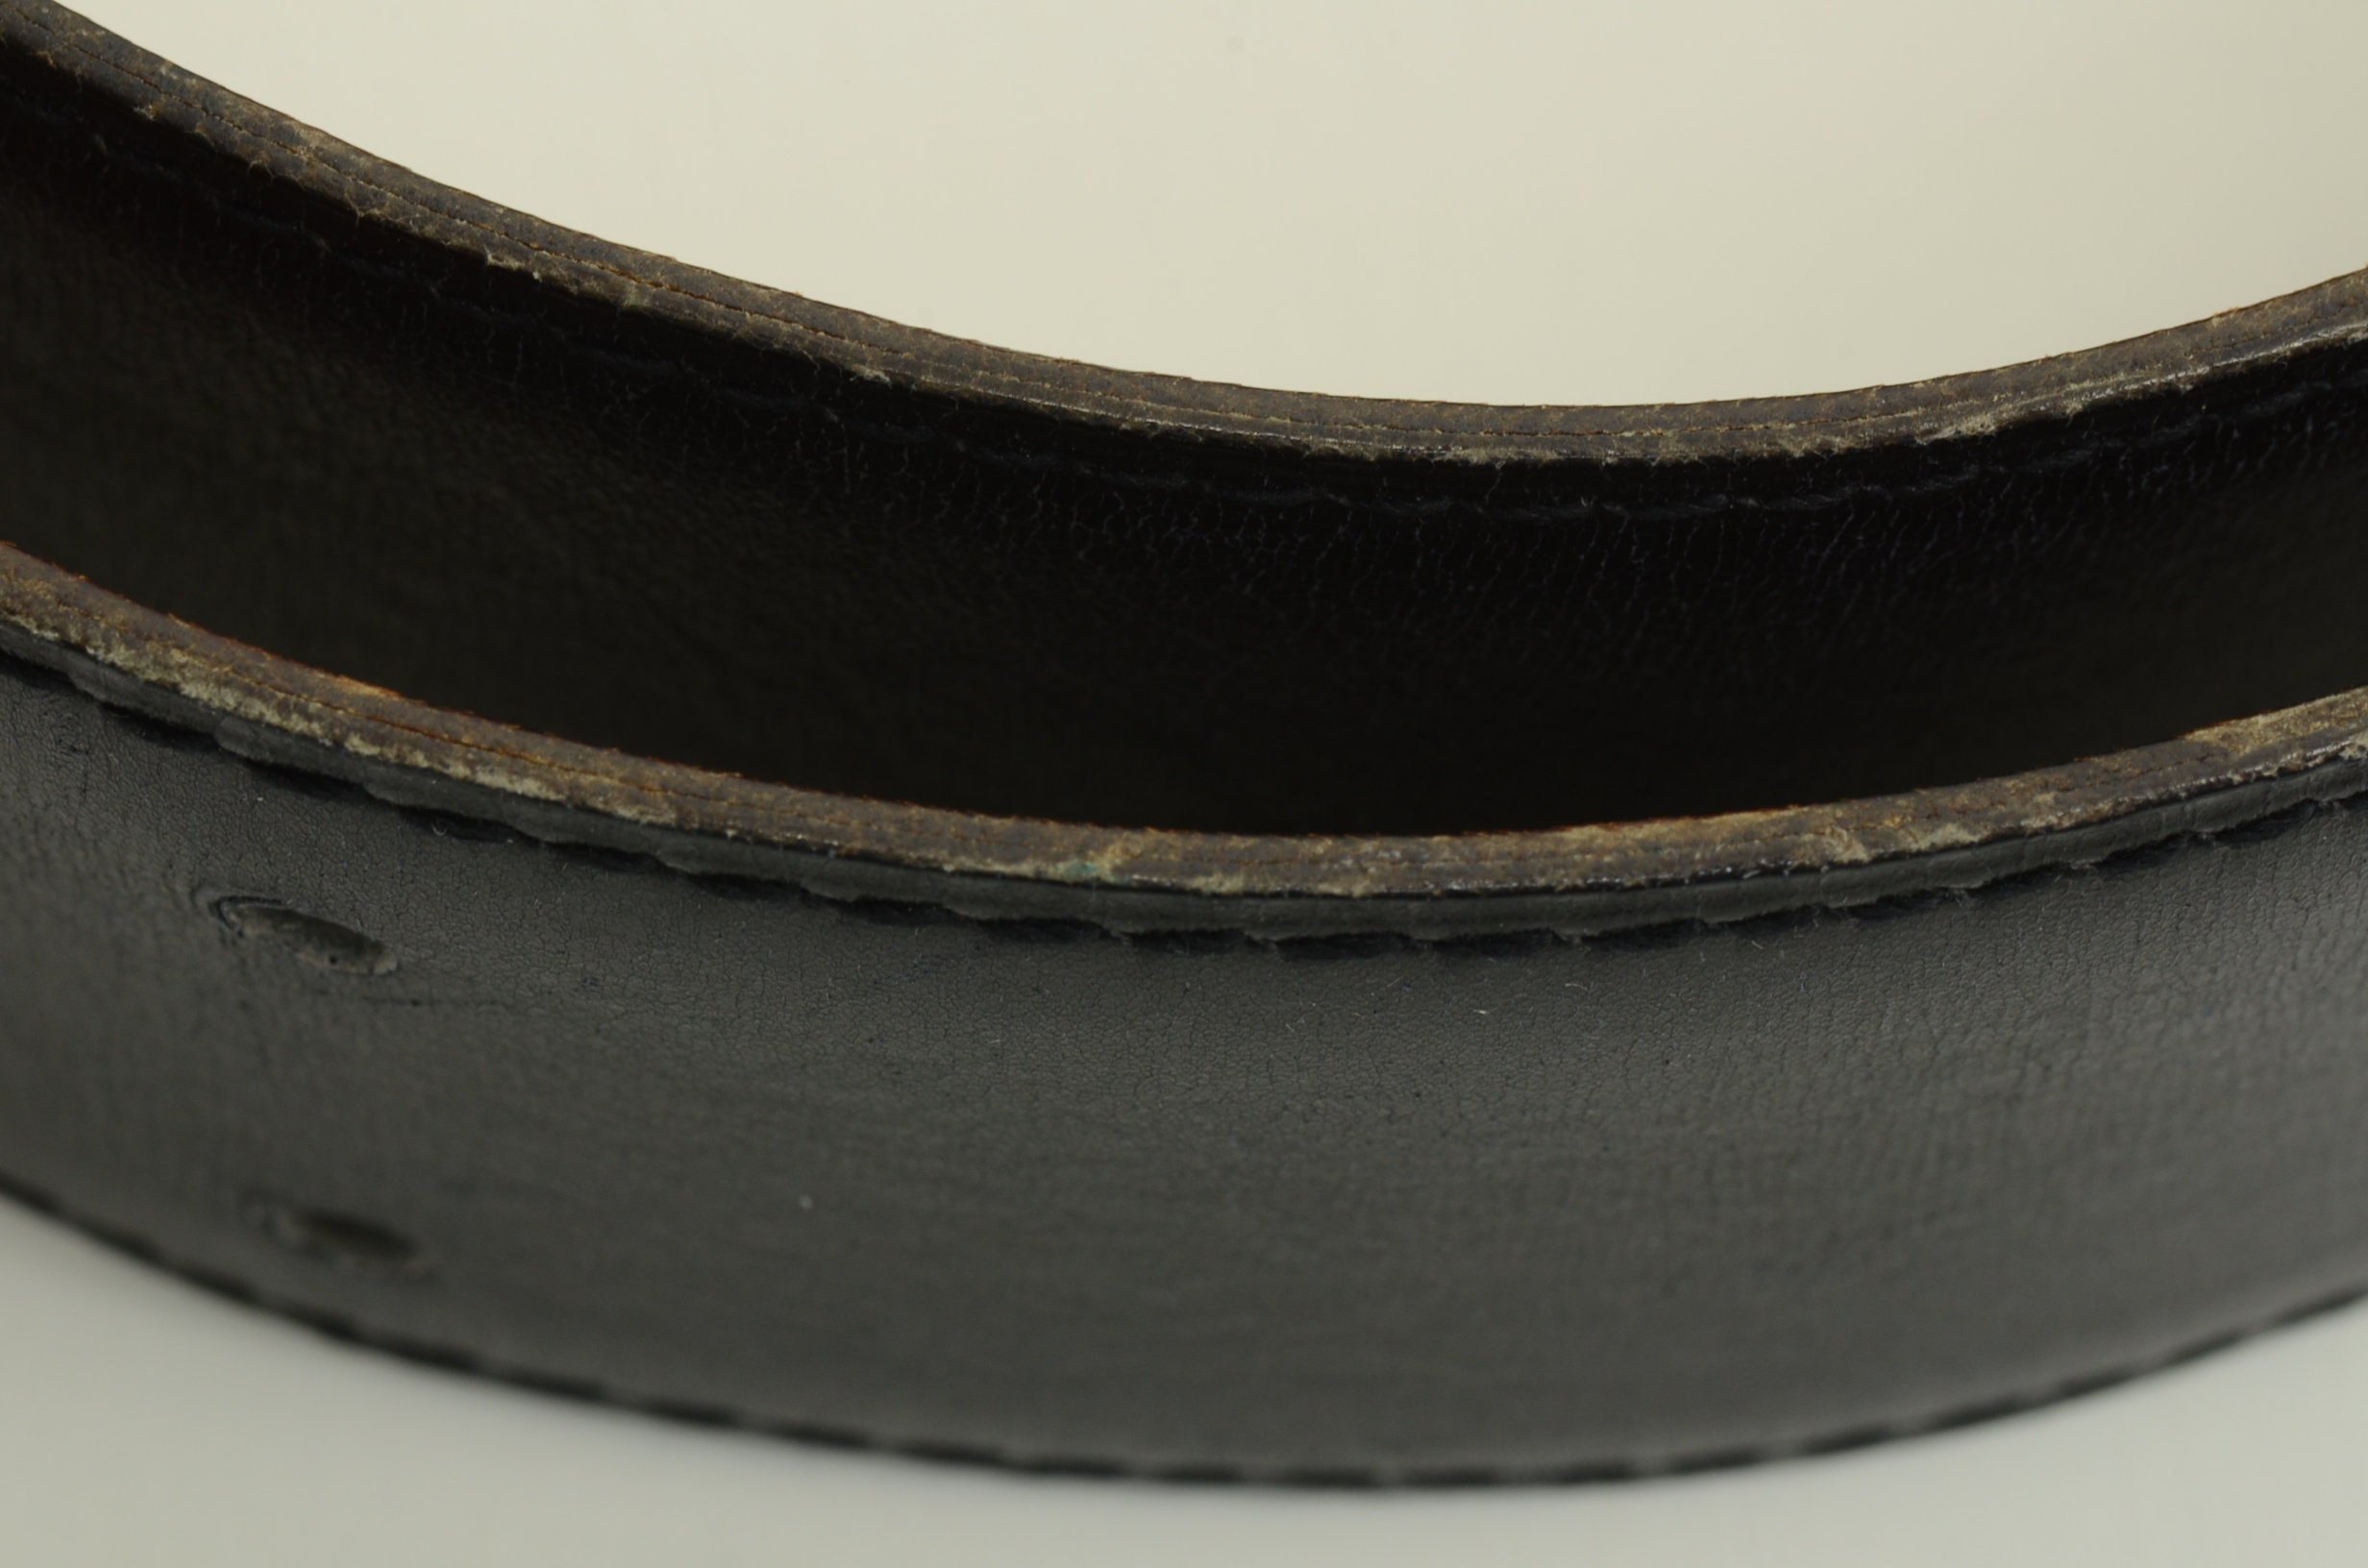 Hermès Authenticated H Leather Belt